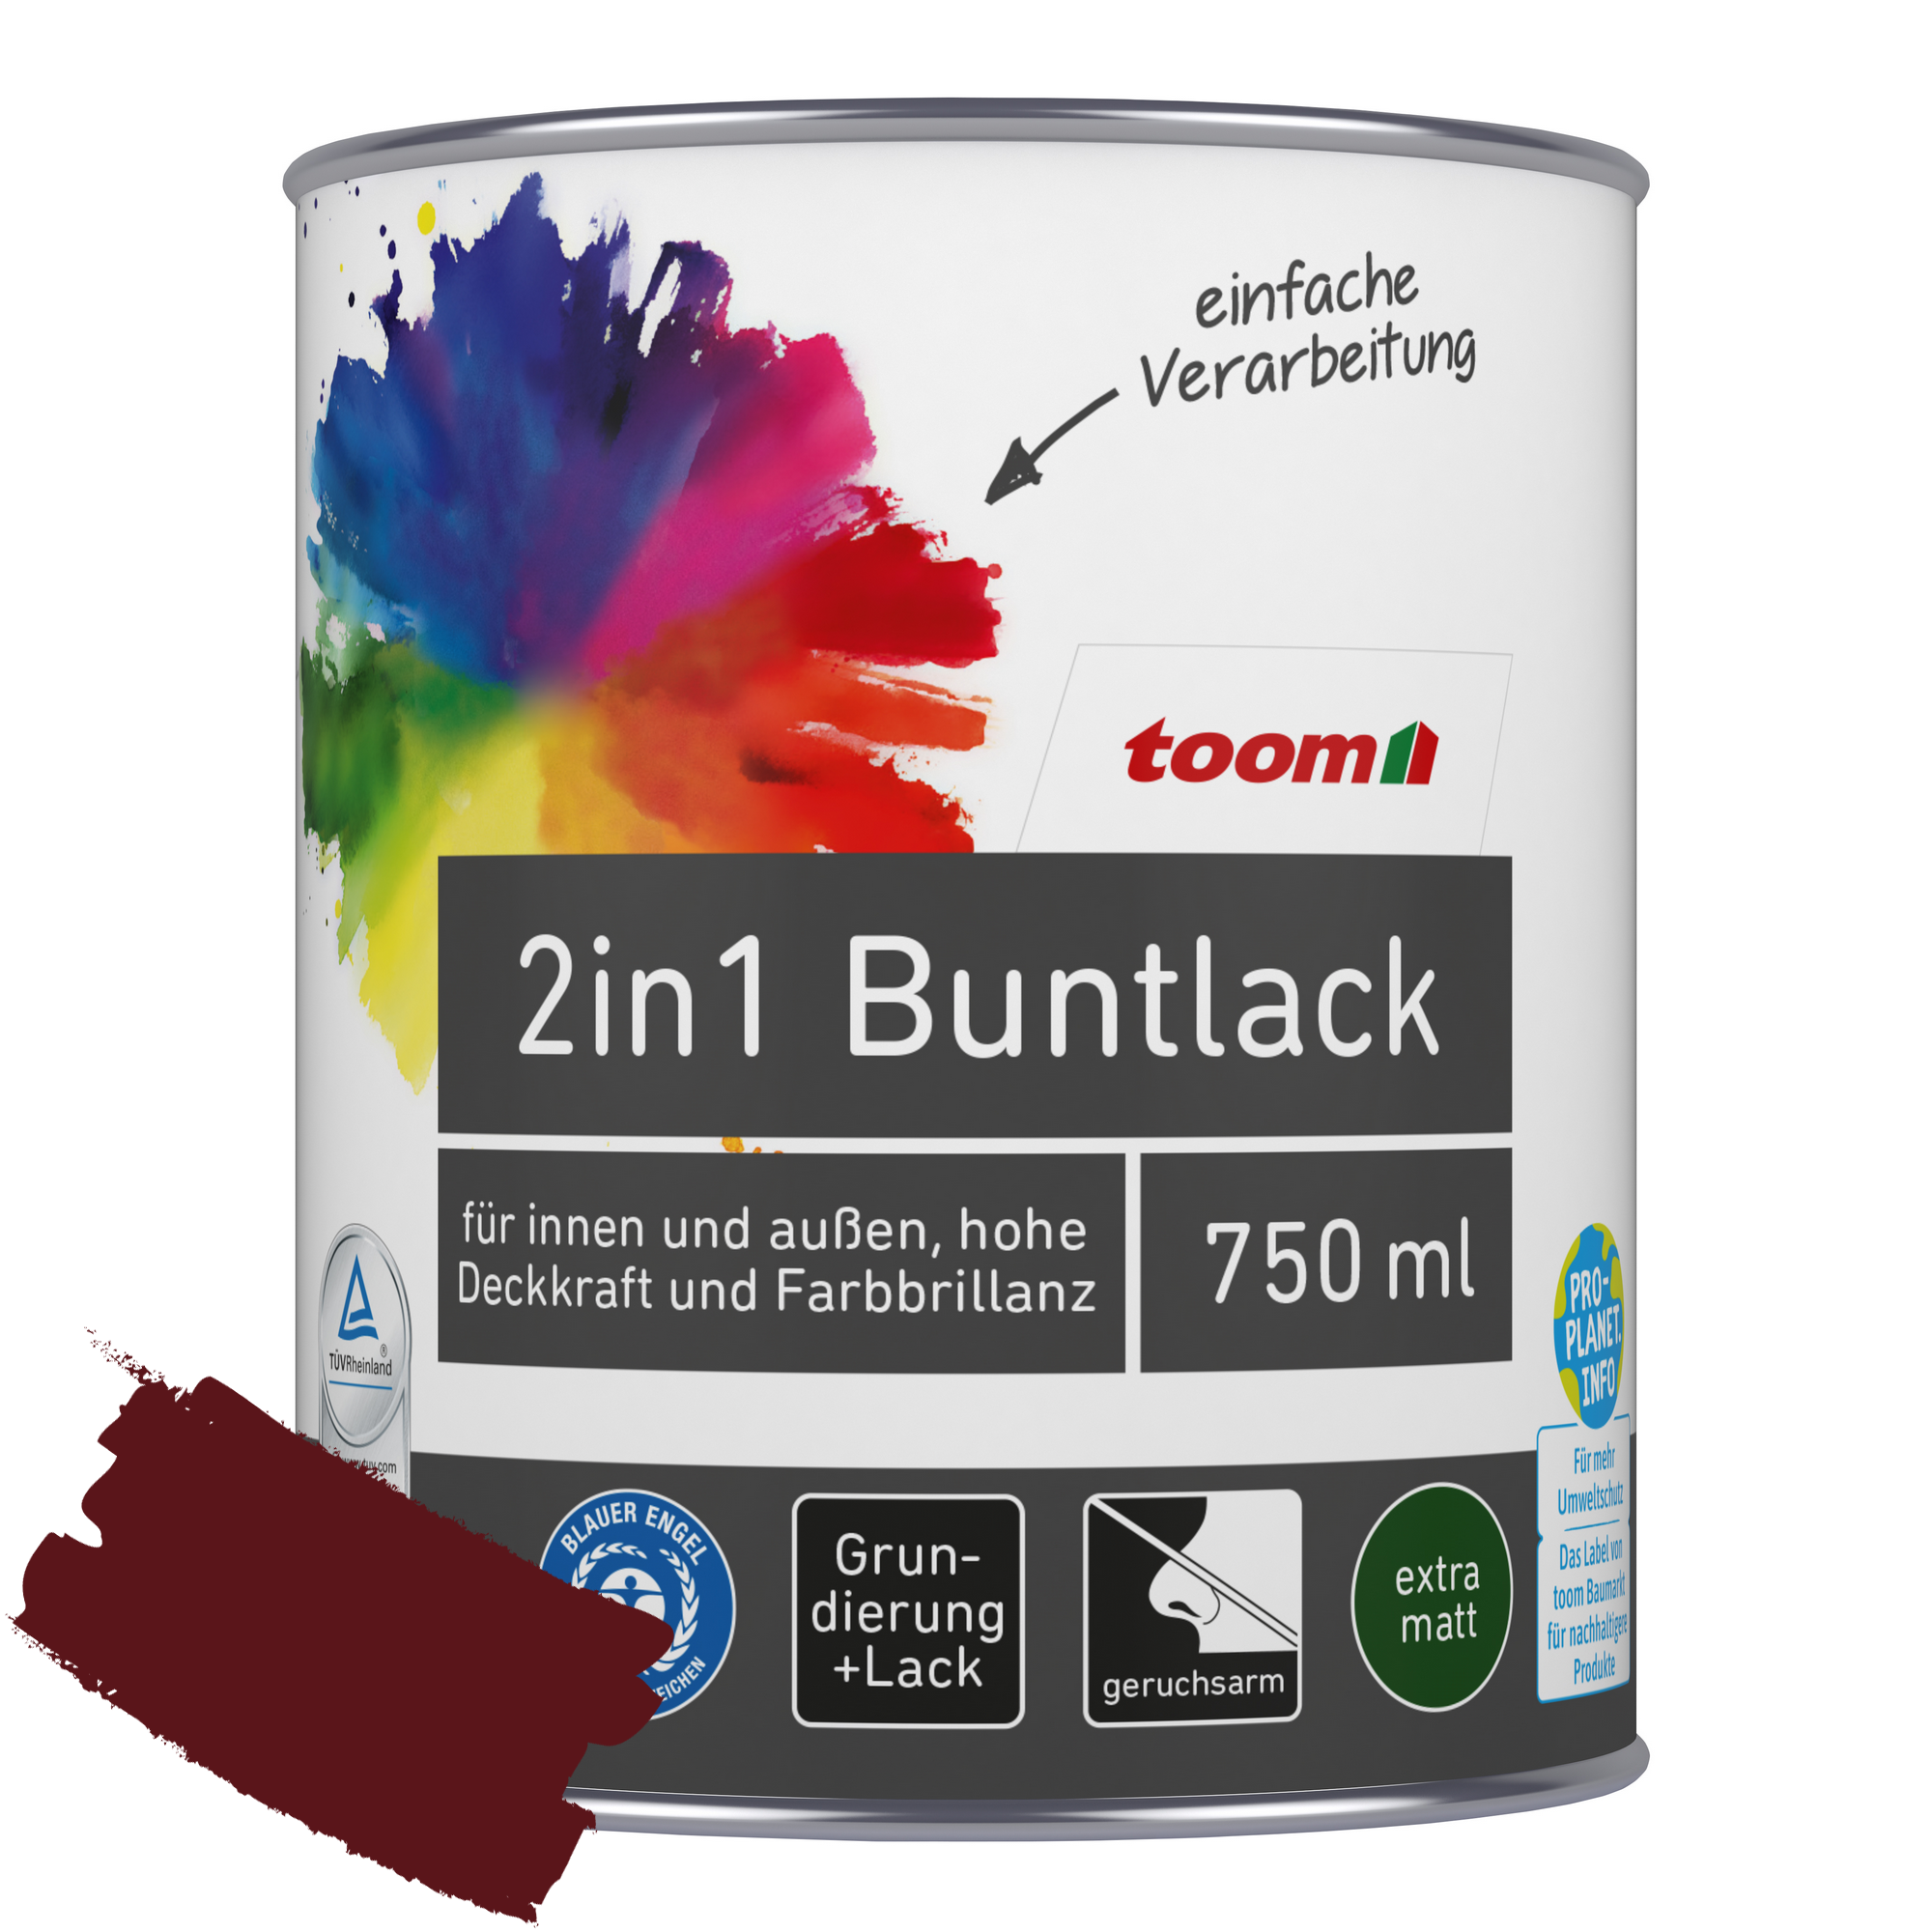 2in1 Buntlack 'Abendrot' purpurrot matt 750 ml + product picture